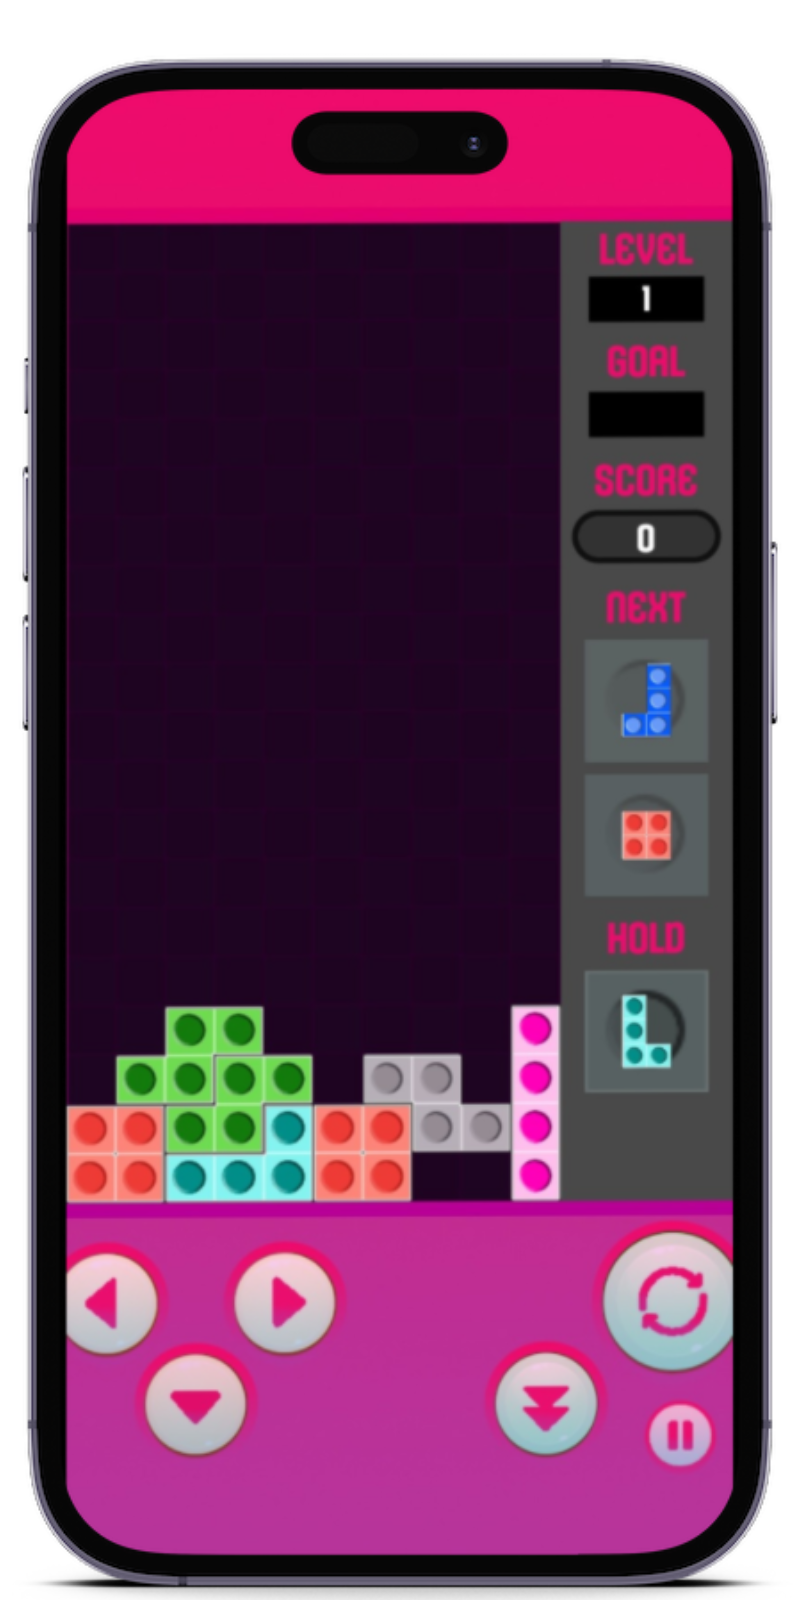 Apps do iPhone: Tetra Classic - Block Puzzle